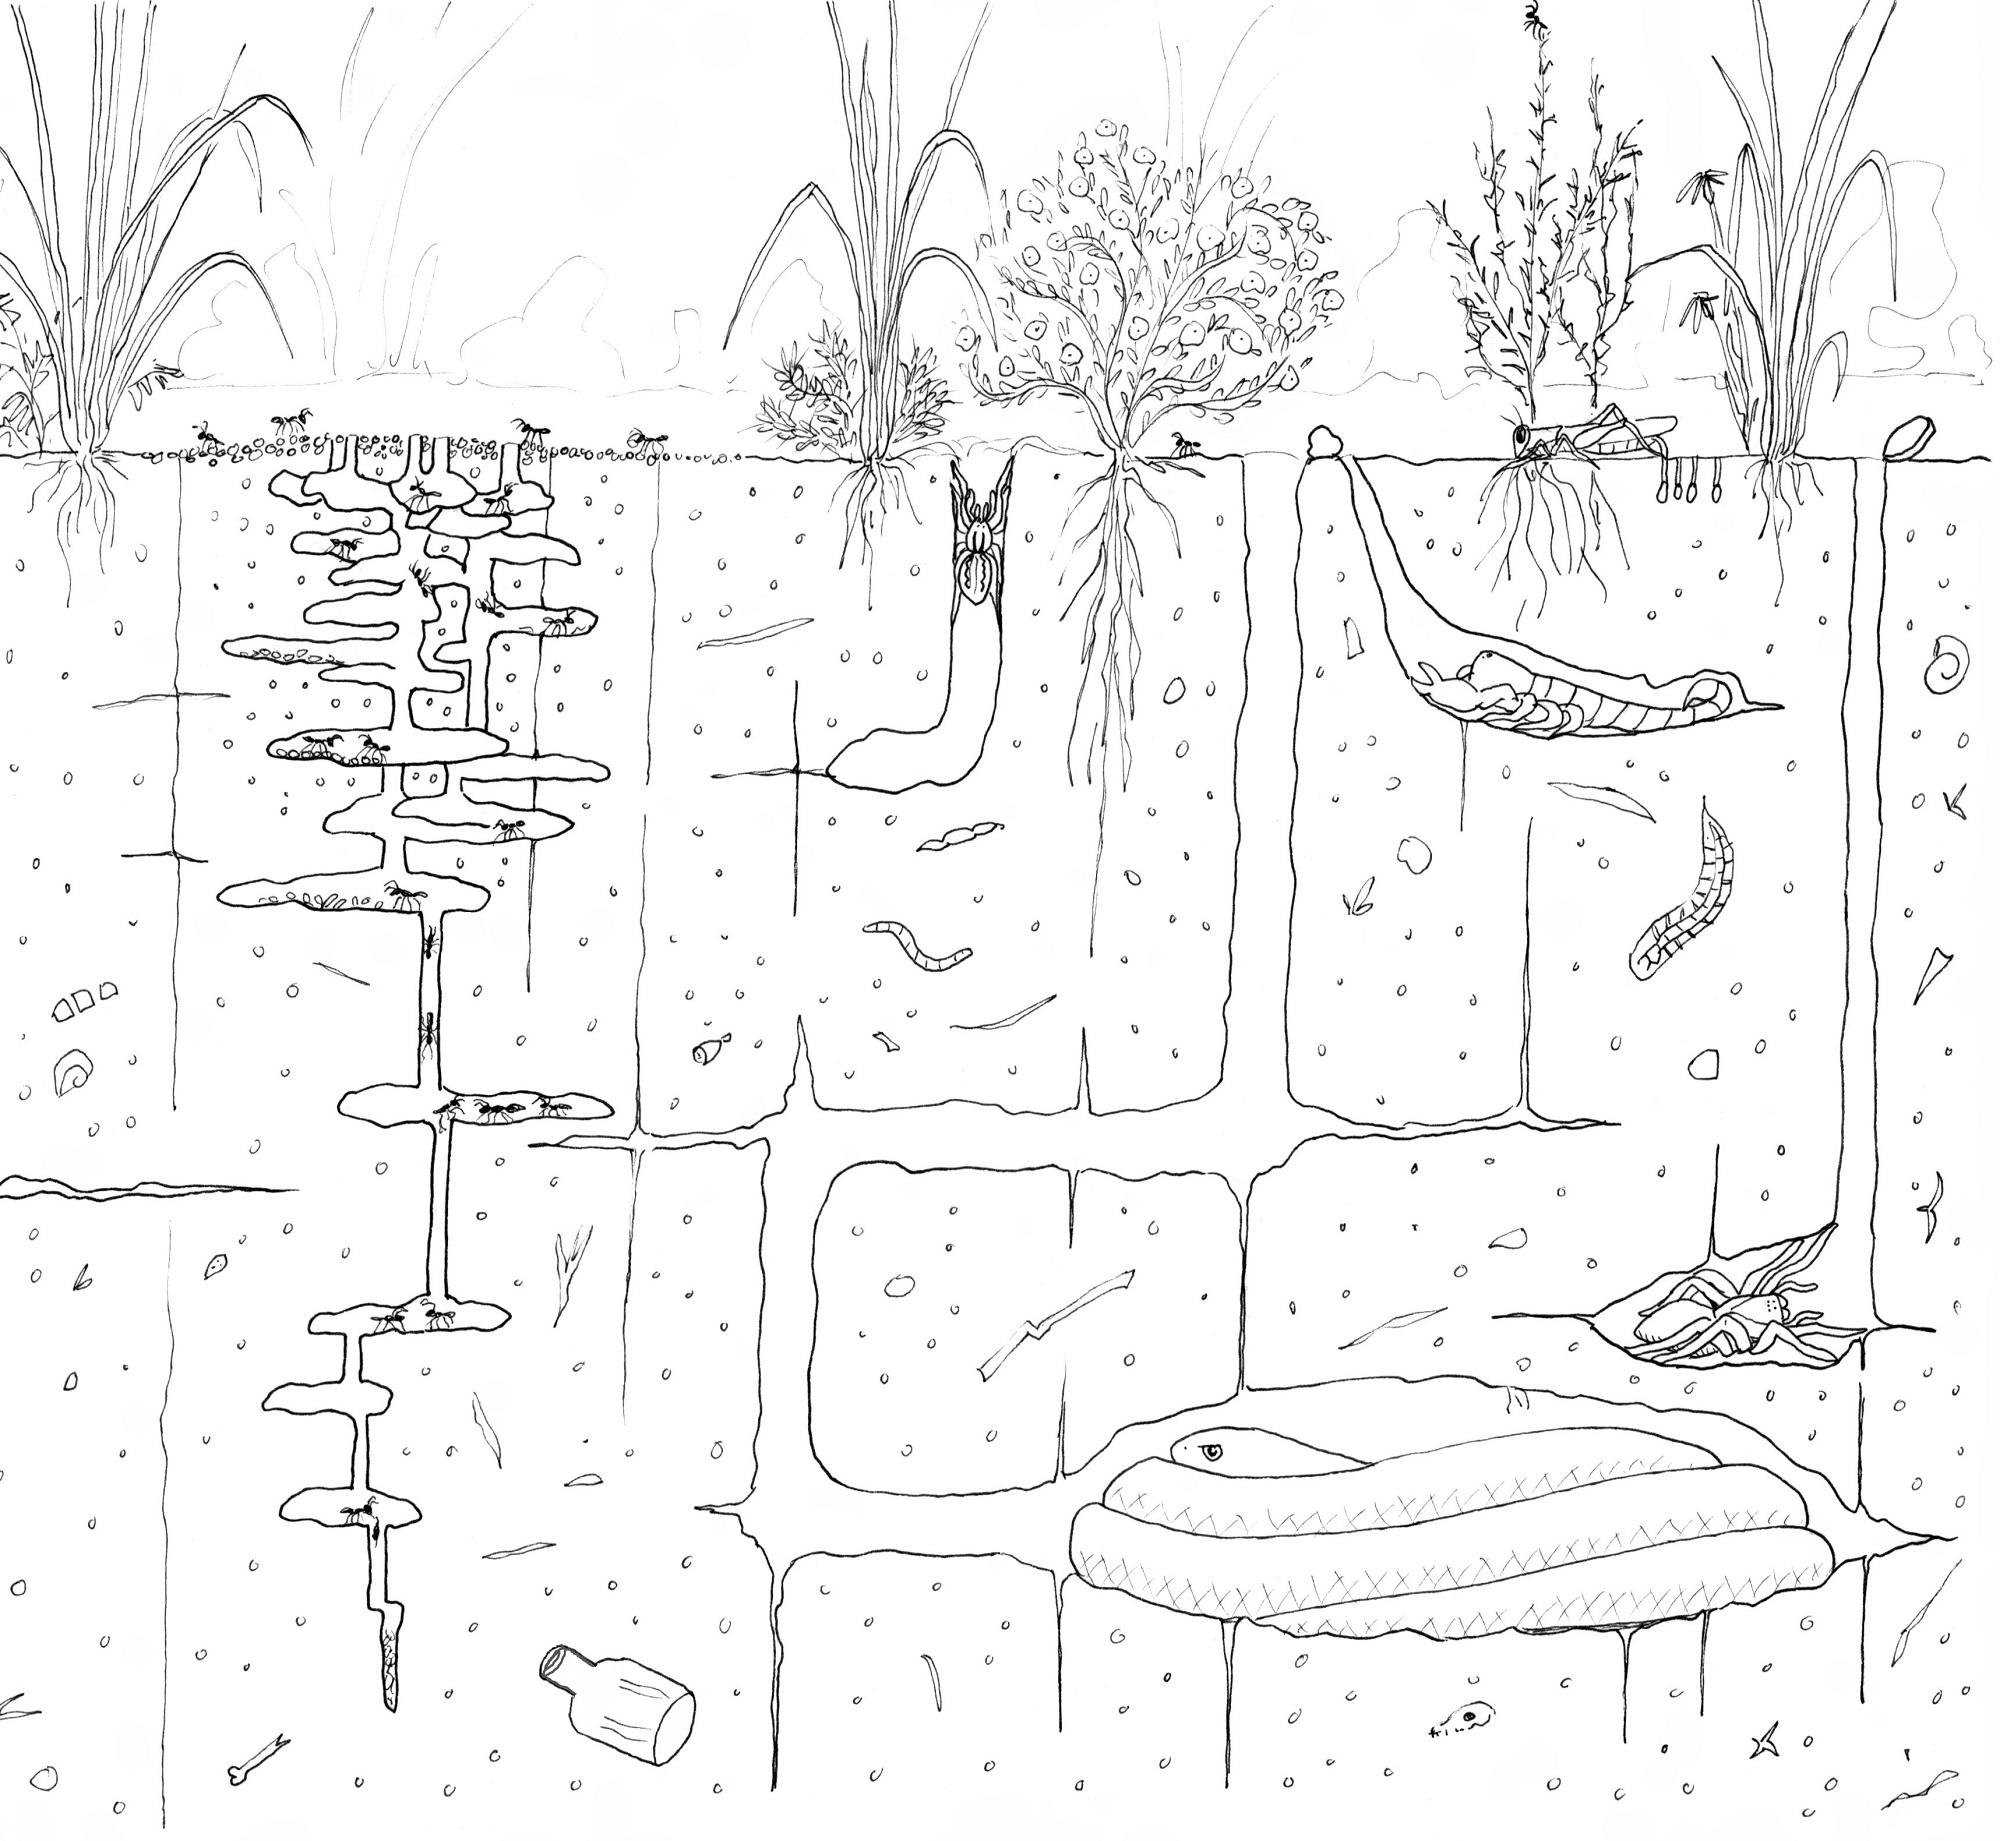 How to draw a grassland Part 3: What lies beneath?